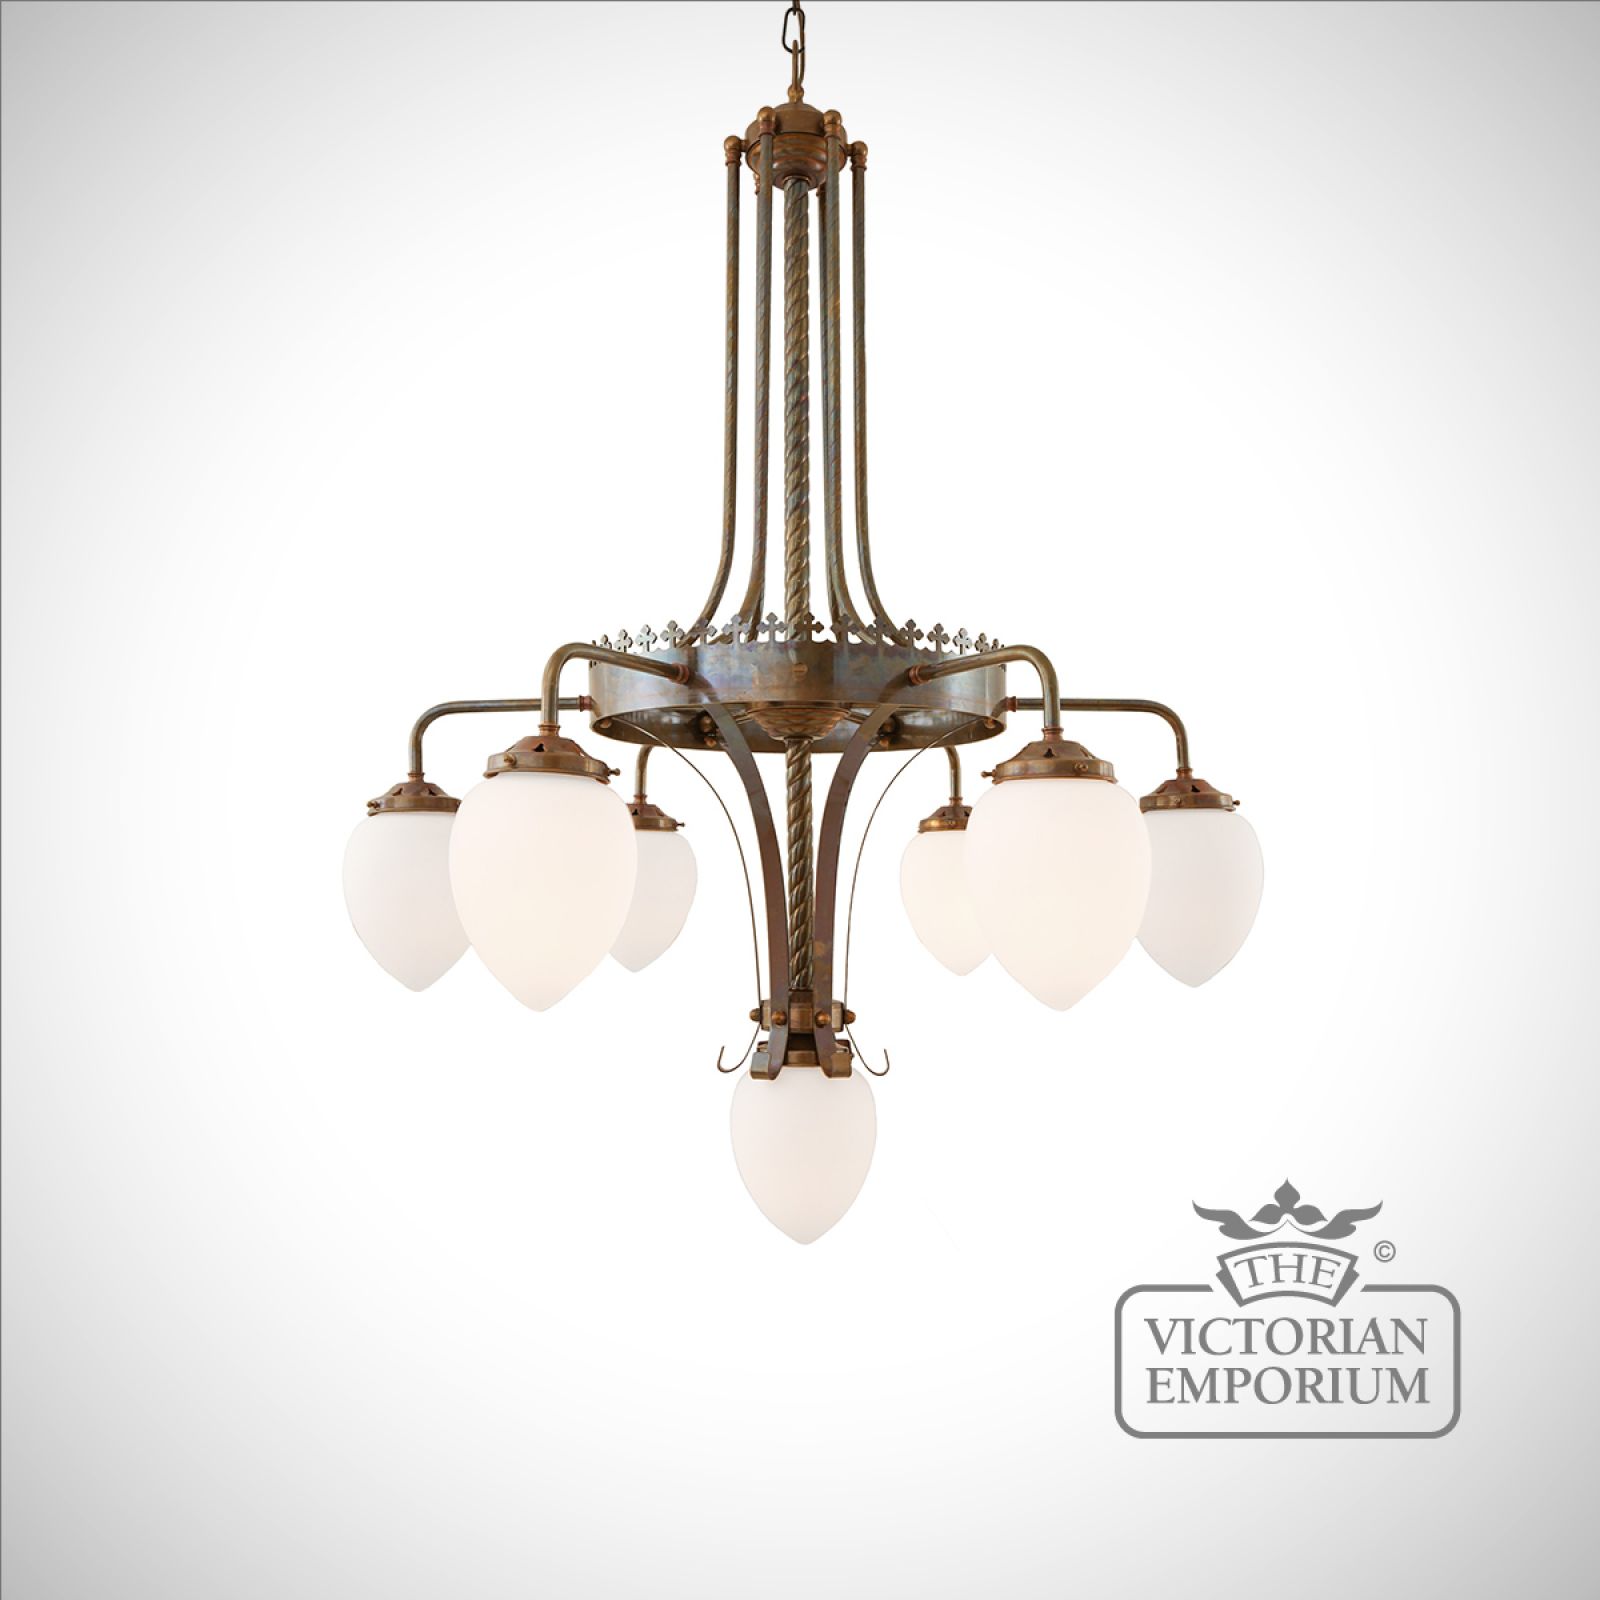 Killarney 6 arm/7 light chandelier for high ceilings